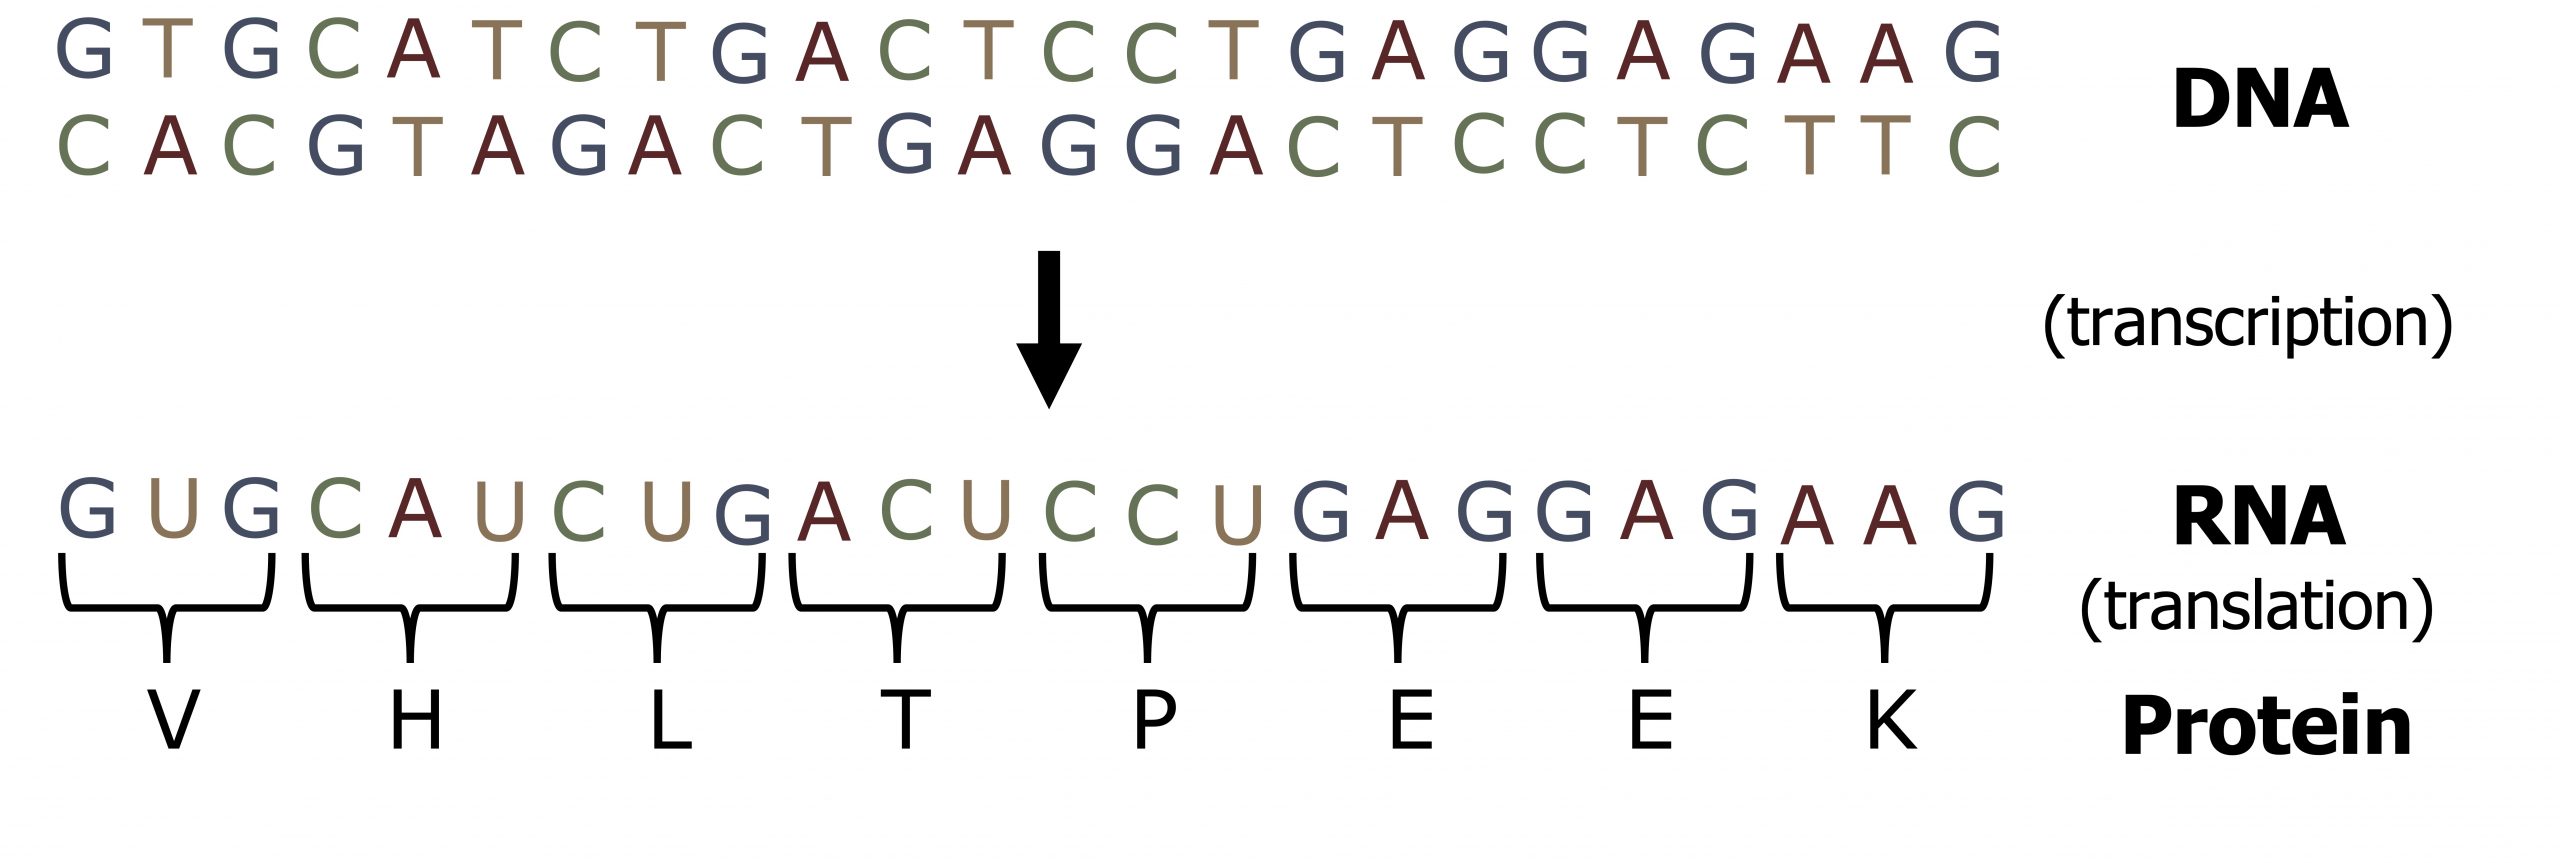 DNA top line: GTGCATCTGACTCCTGAGGAGAAG. DNA bottom line: CACGTAGACTGAGGACTCCTCTTC. Arrow with text transcription to RNA GUGCAUCUGACUCCUGAGGAGAAG. Translation to protein sequence VHLTPEEK.